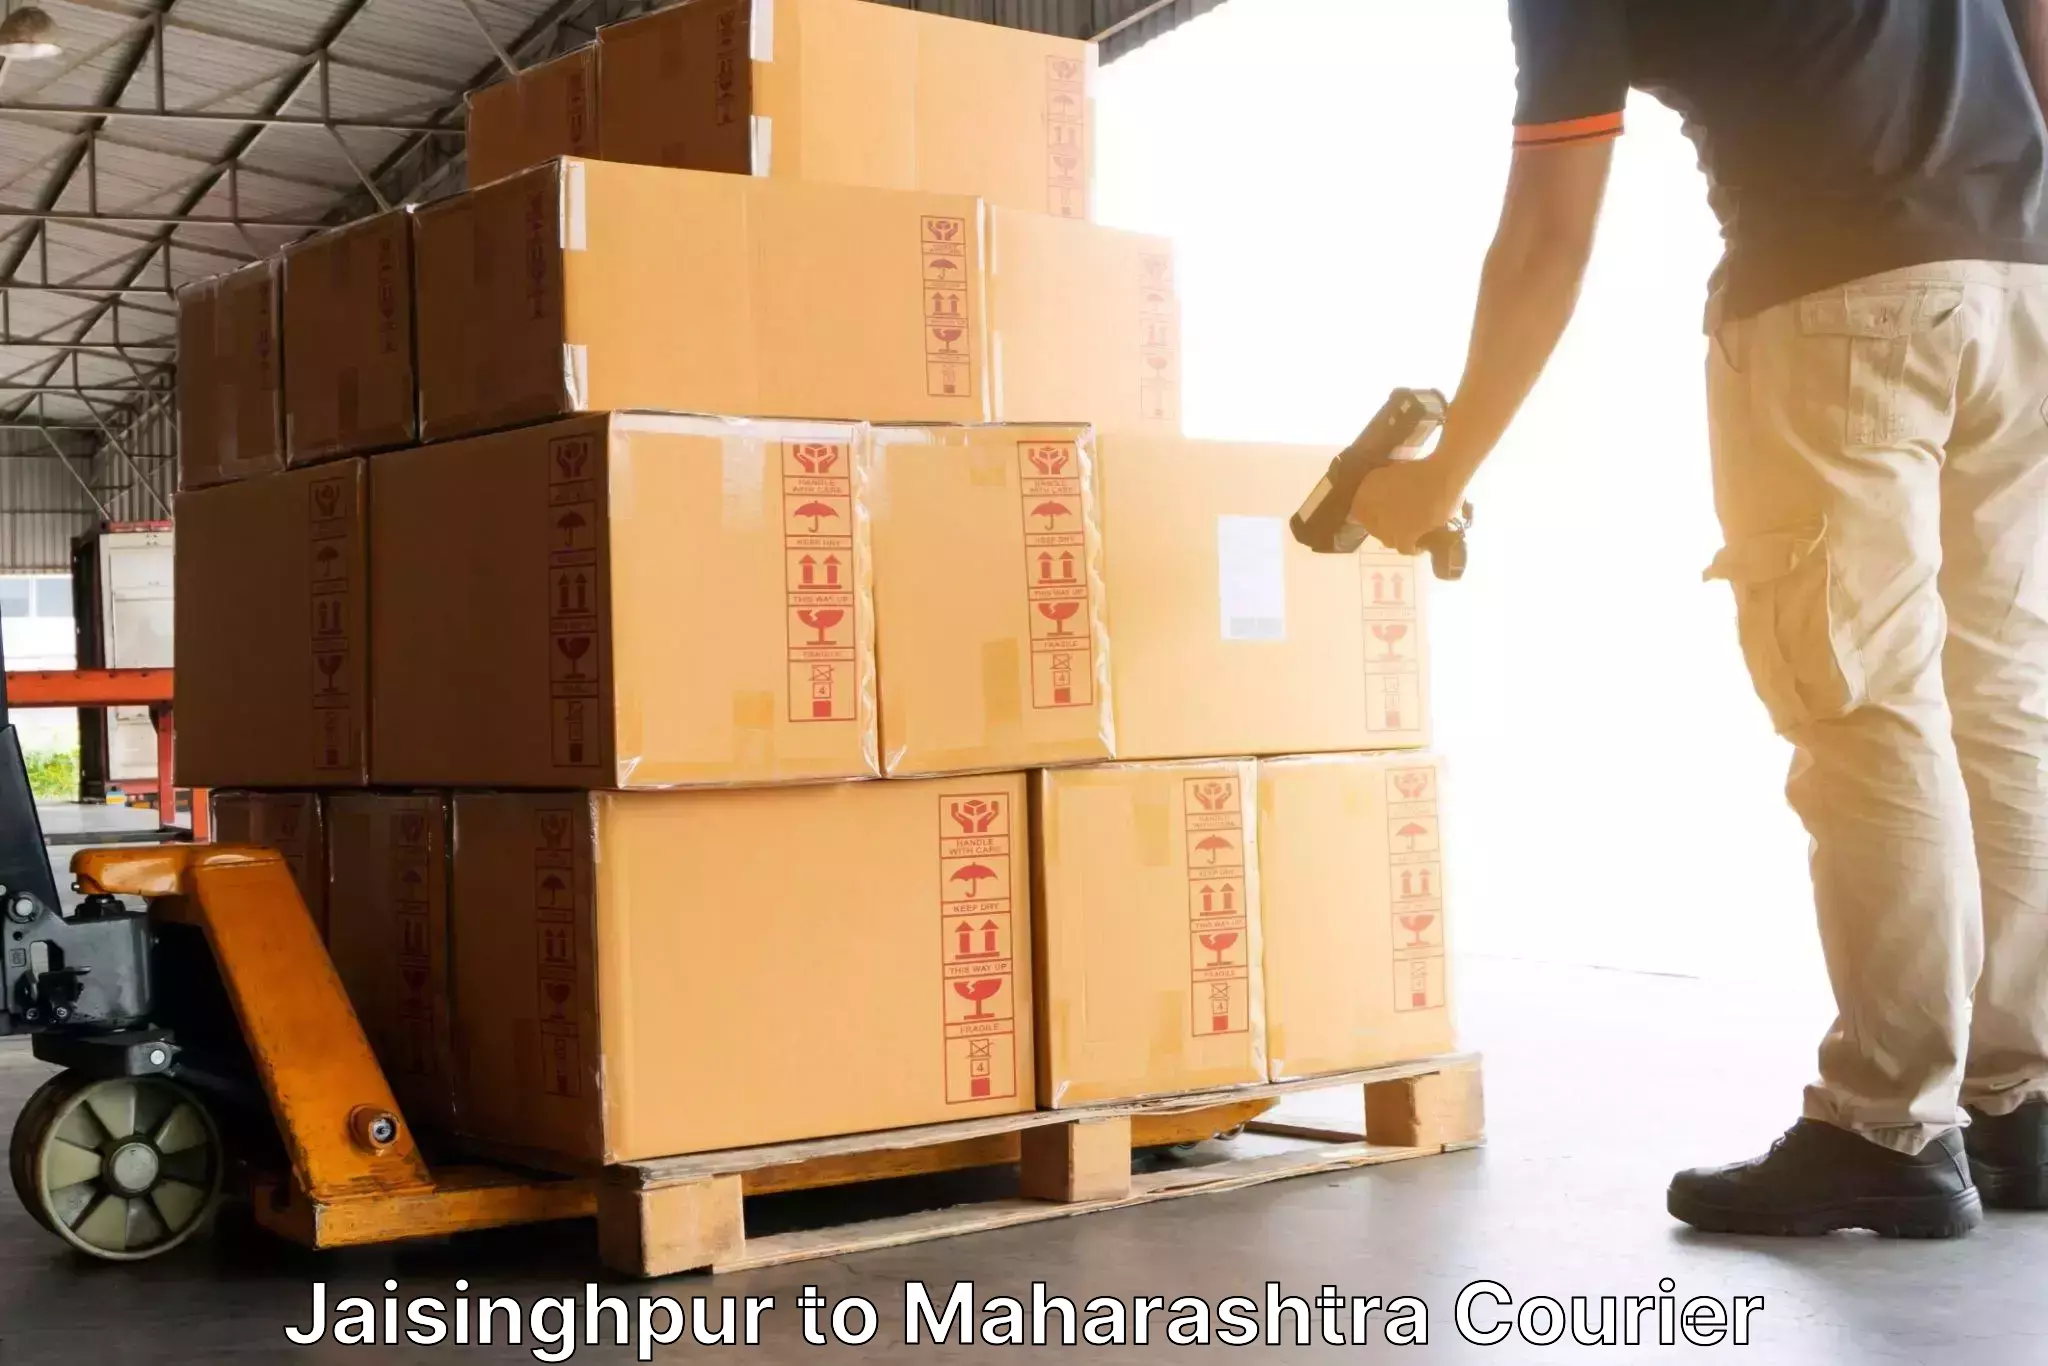 24-hour courier service in Jaisinghpur to Maharashtra